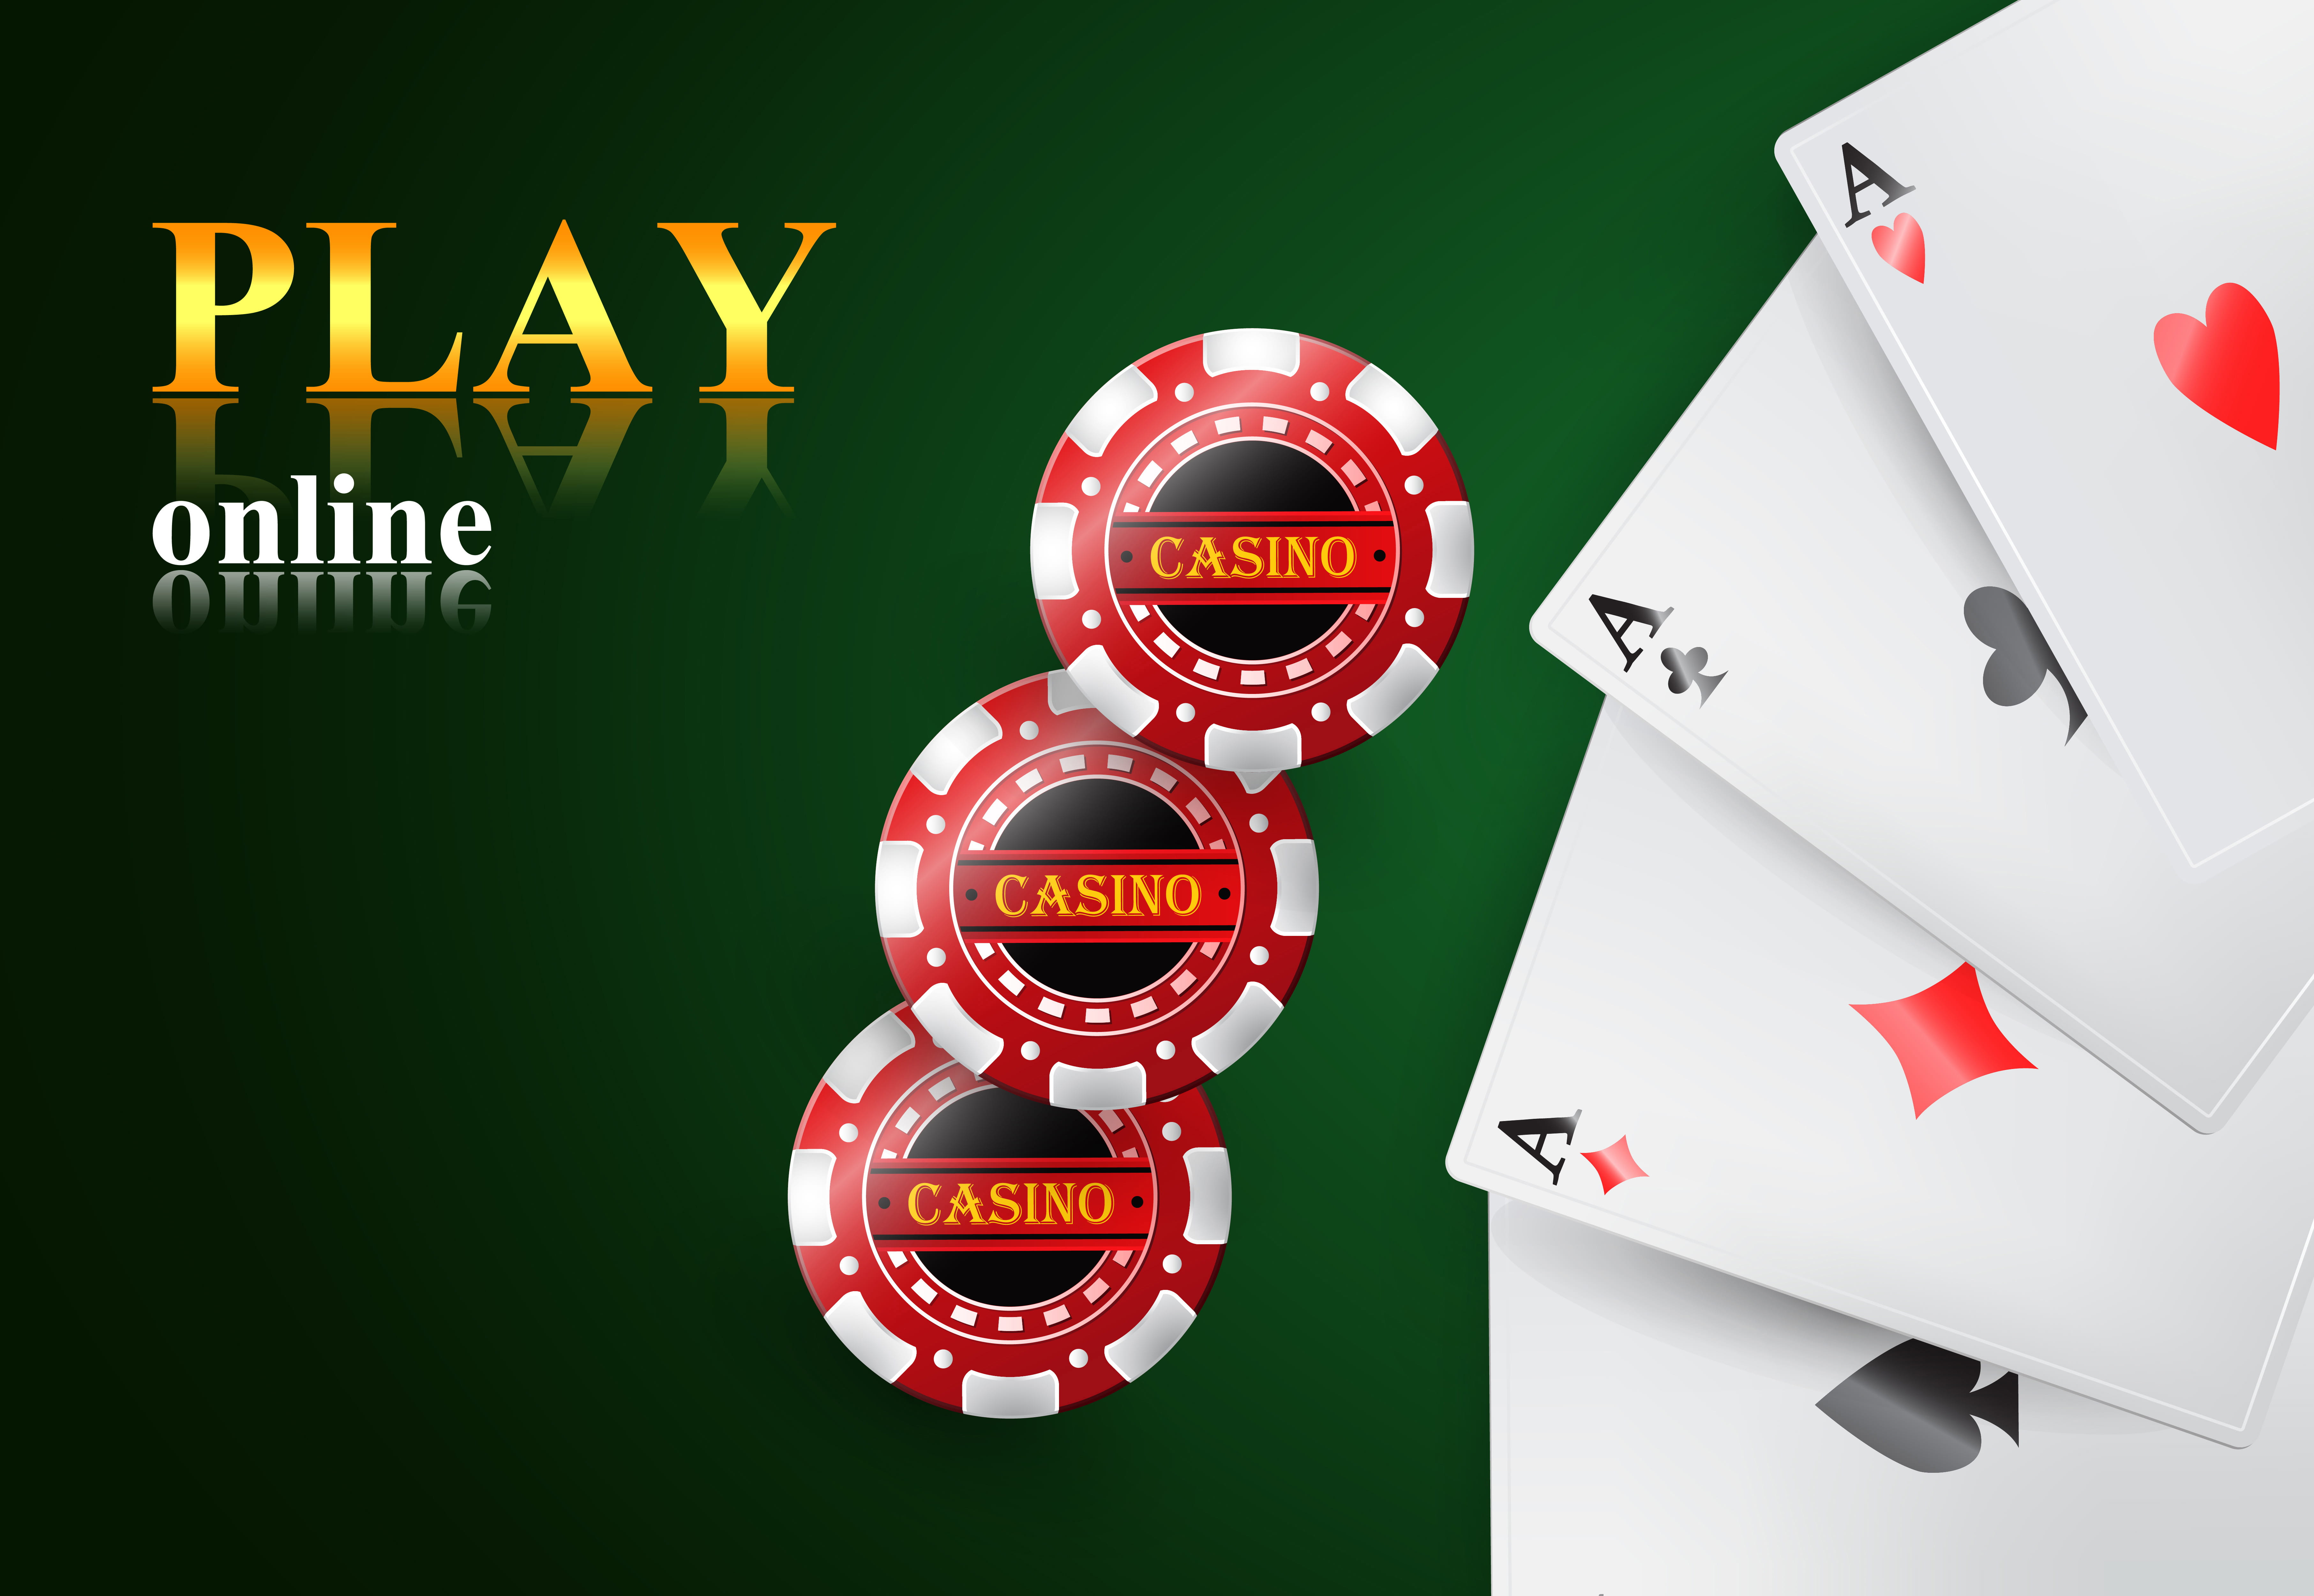 usa legal online gambling casino